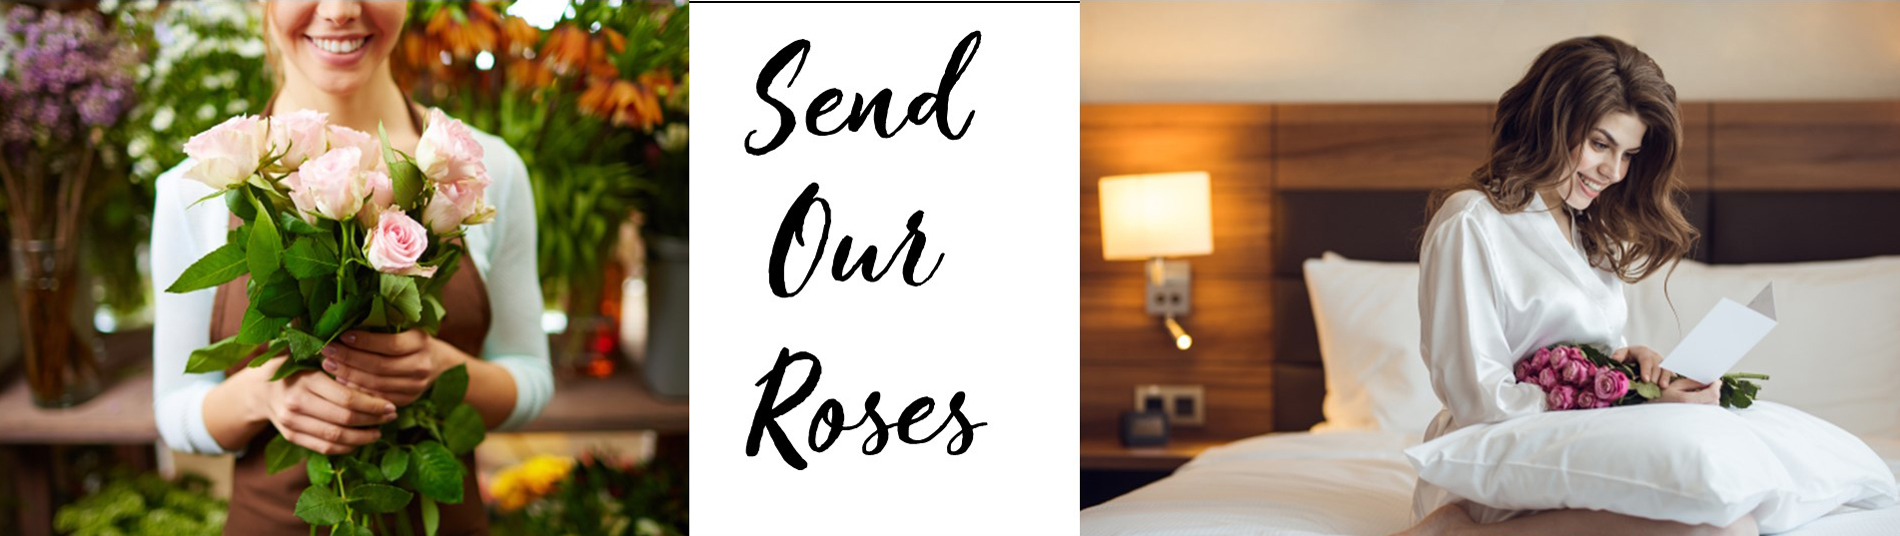 banner send roses